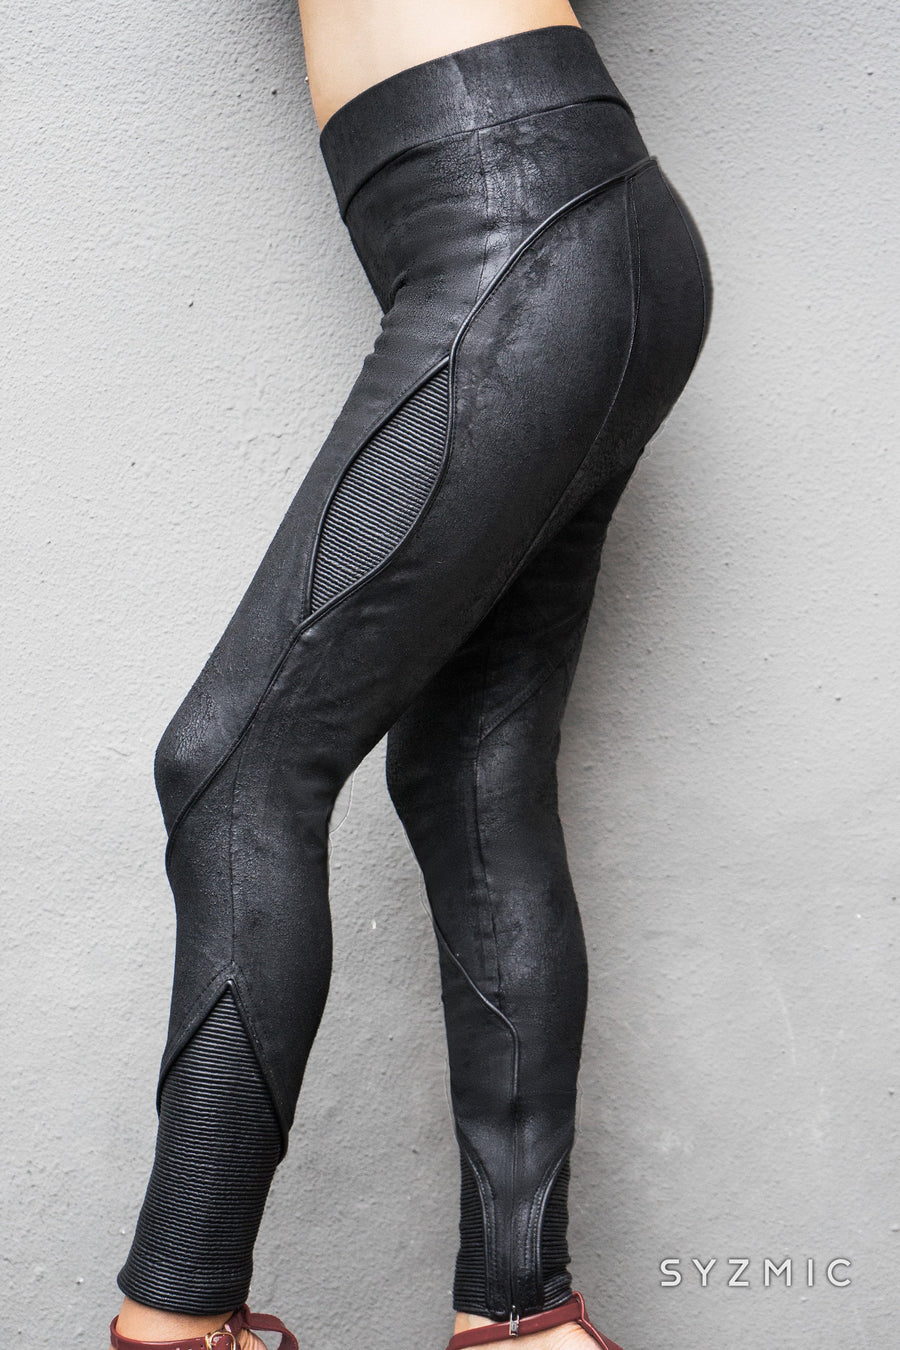 CEPH-461 Biomorphic Metallic Textured Alien Skin Ankle Leggings